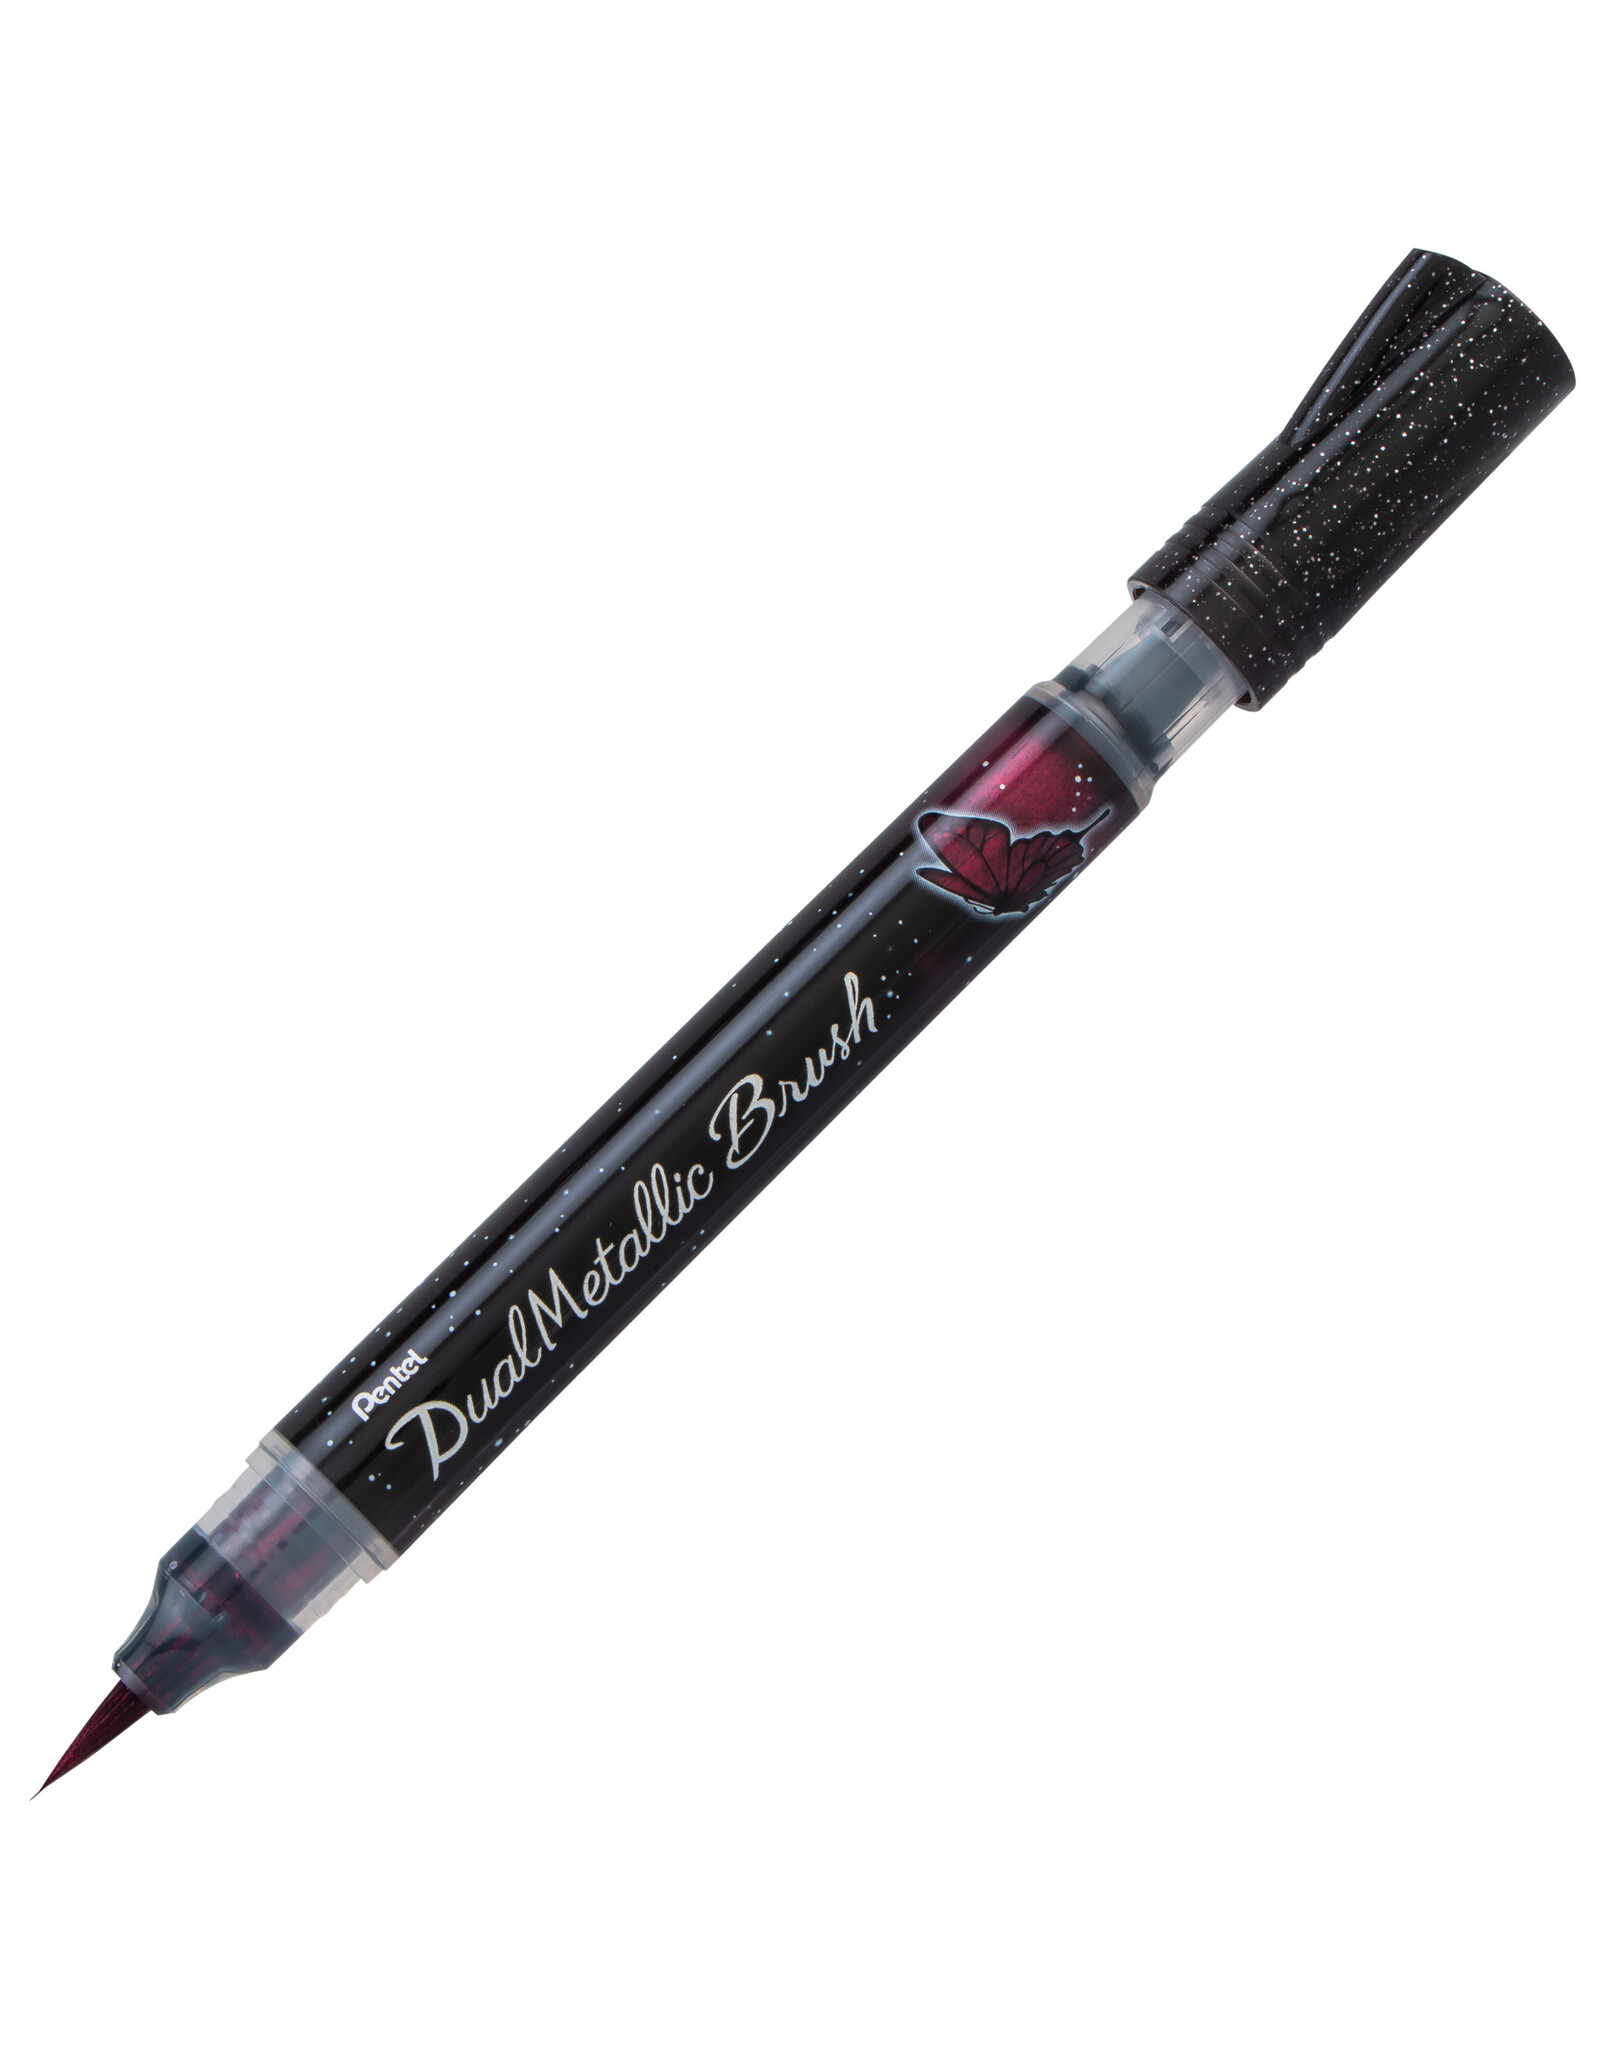 Pentel Pentel Arts DualMetallic Brush Pen, Black/Metallic Red